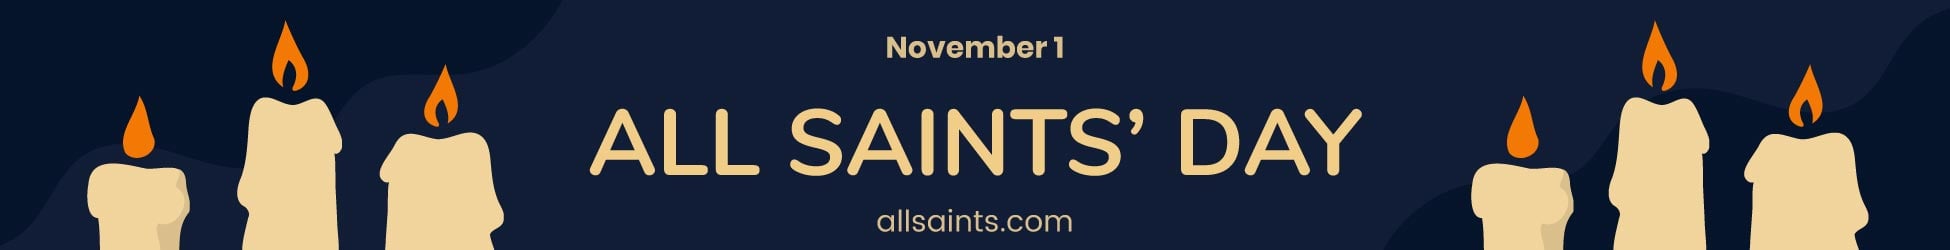 All Saints' Day Banner - Download in Illustrator, PSD, EPS, SVG, JPG ...